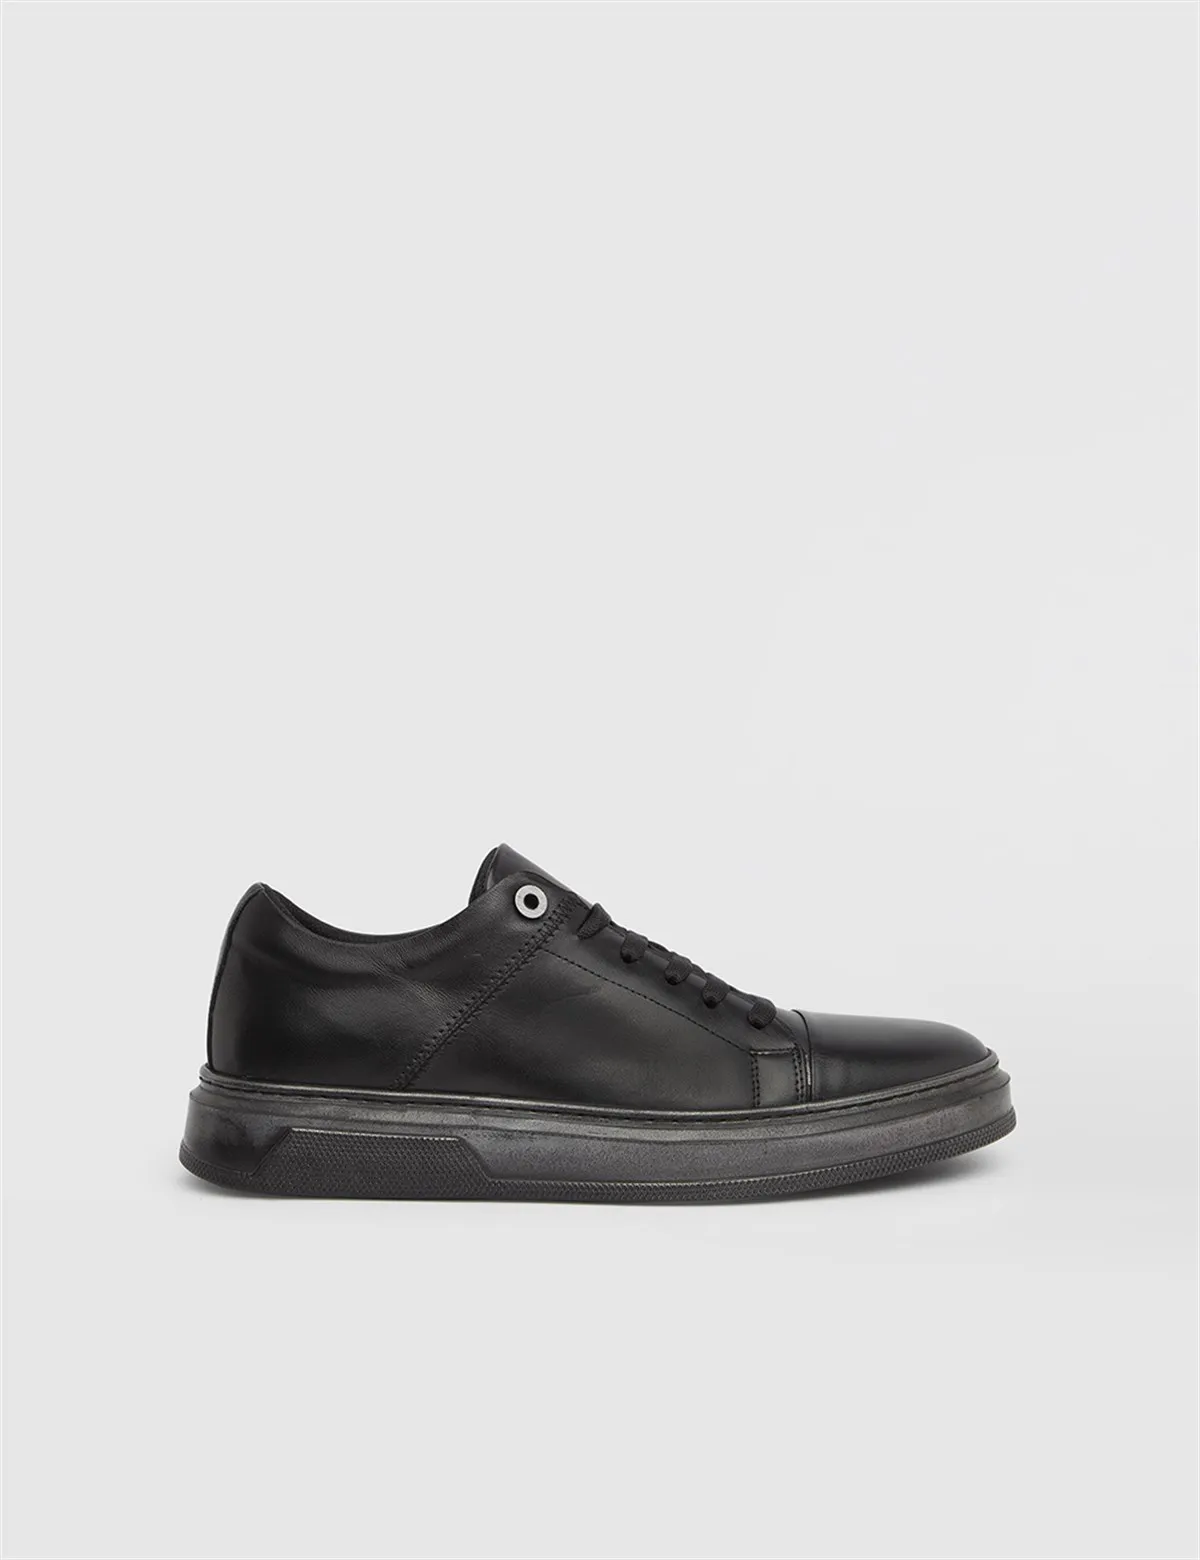 

ILVi-Genuine Leather Handmade Belfast Antique Black Sneaker Man's Shoes 2022 Fall/Winter